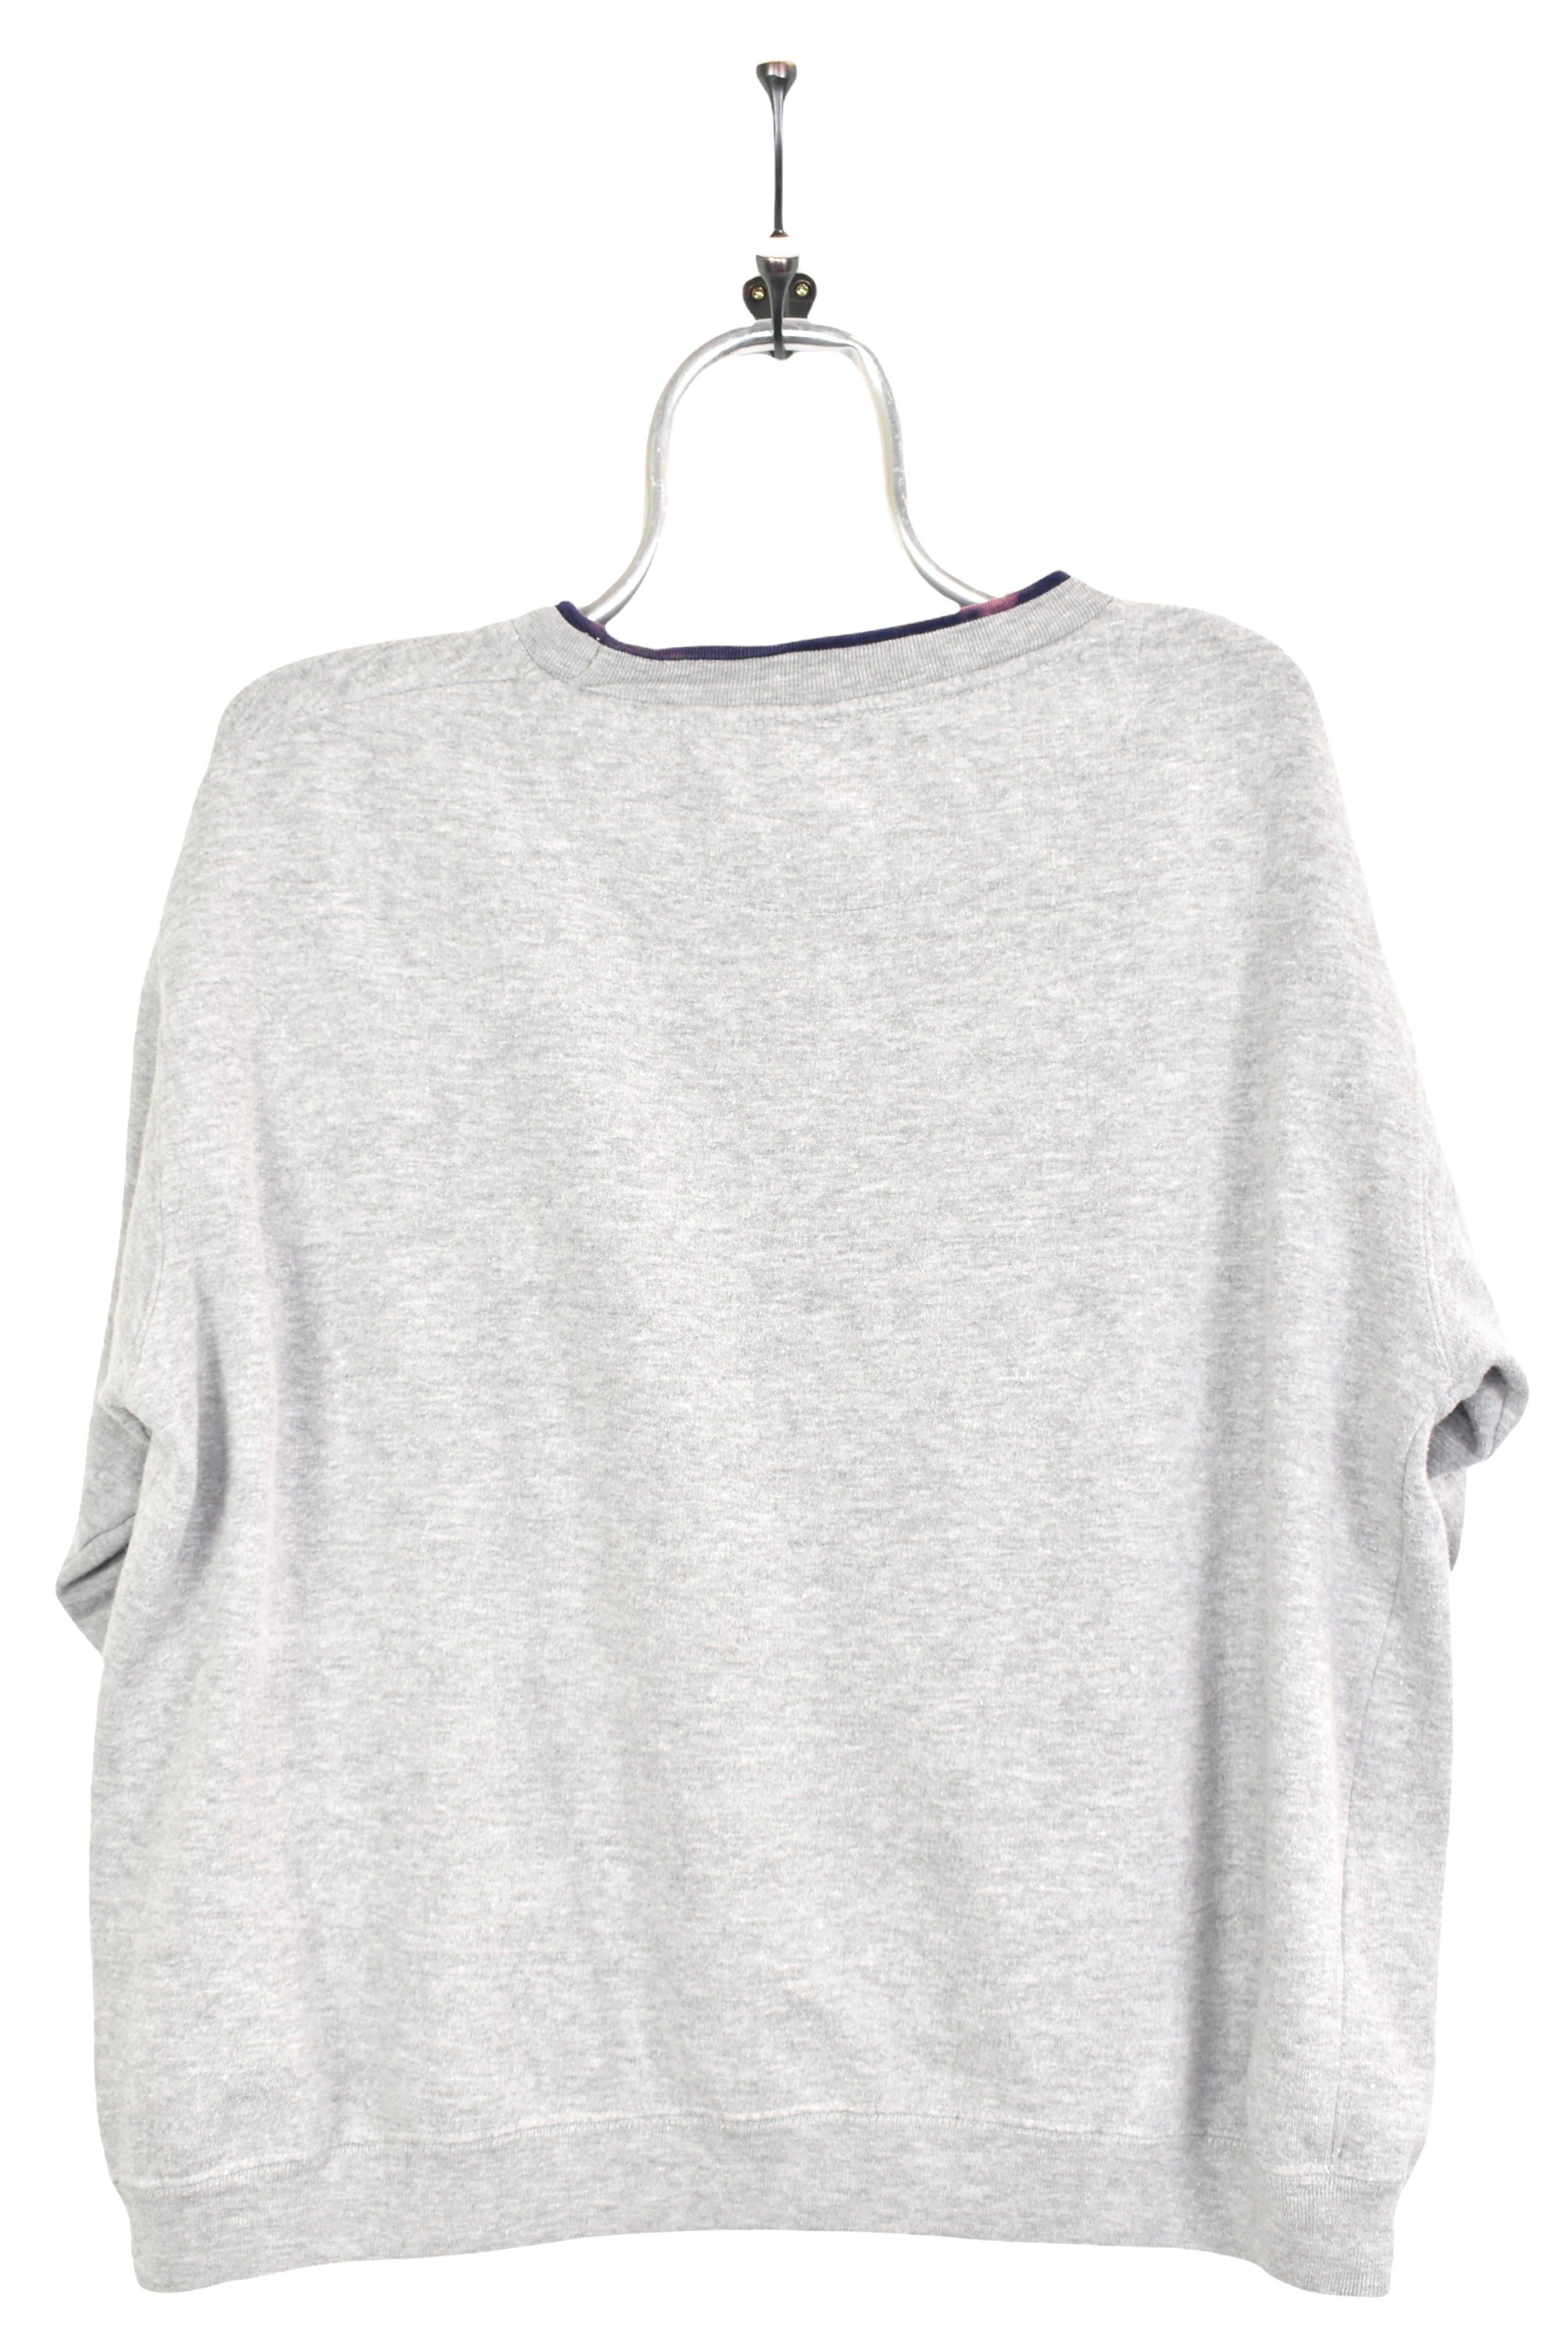 Women's vintage Disney sweatshirt, Tigger cartoon embroidered crewneck - large, grey DISNEY / CARTOON